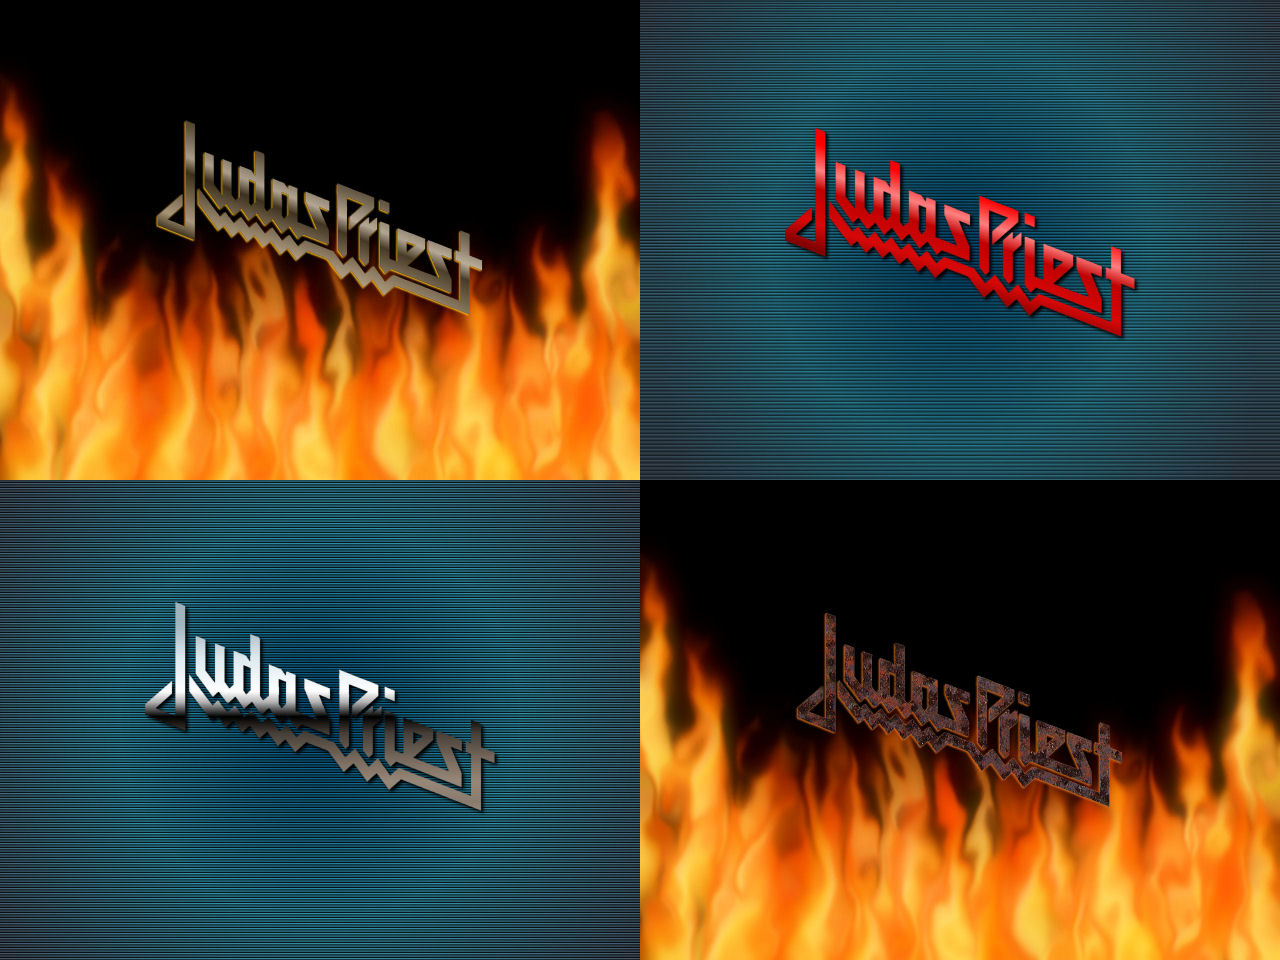 Free download wallpaper Music, Judas Priest on your PC desktop